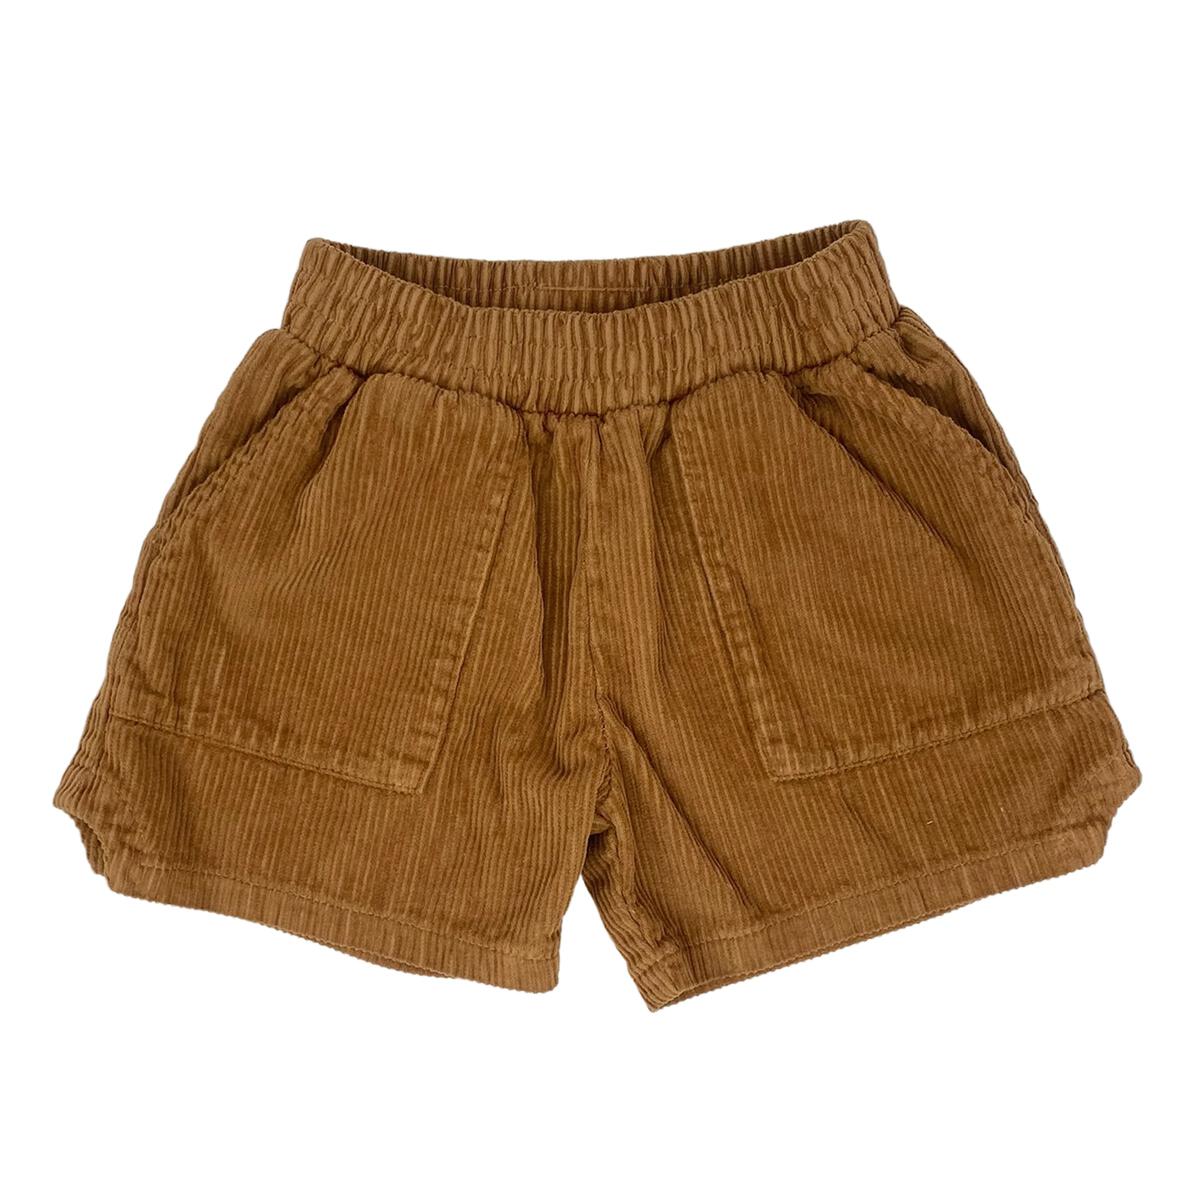 "ponderosa" dad shorts